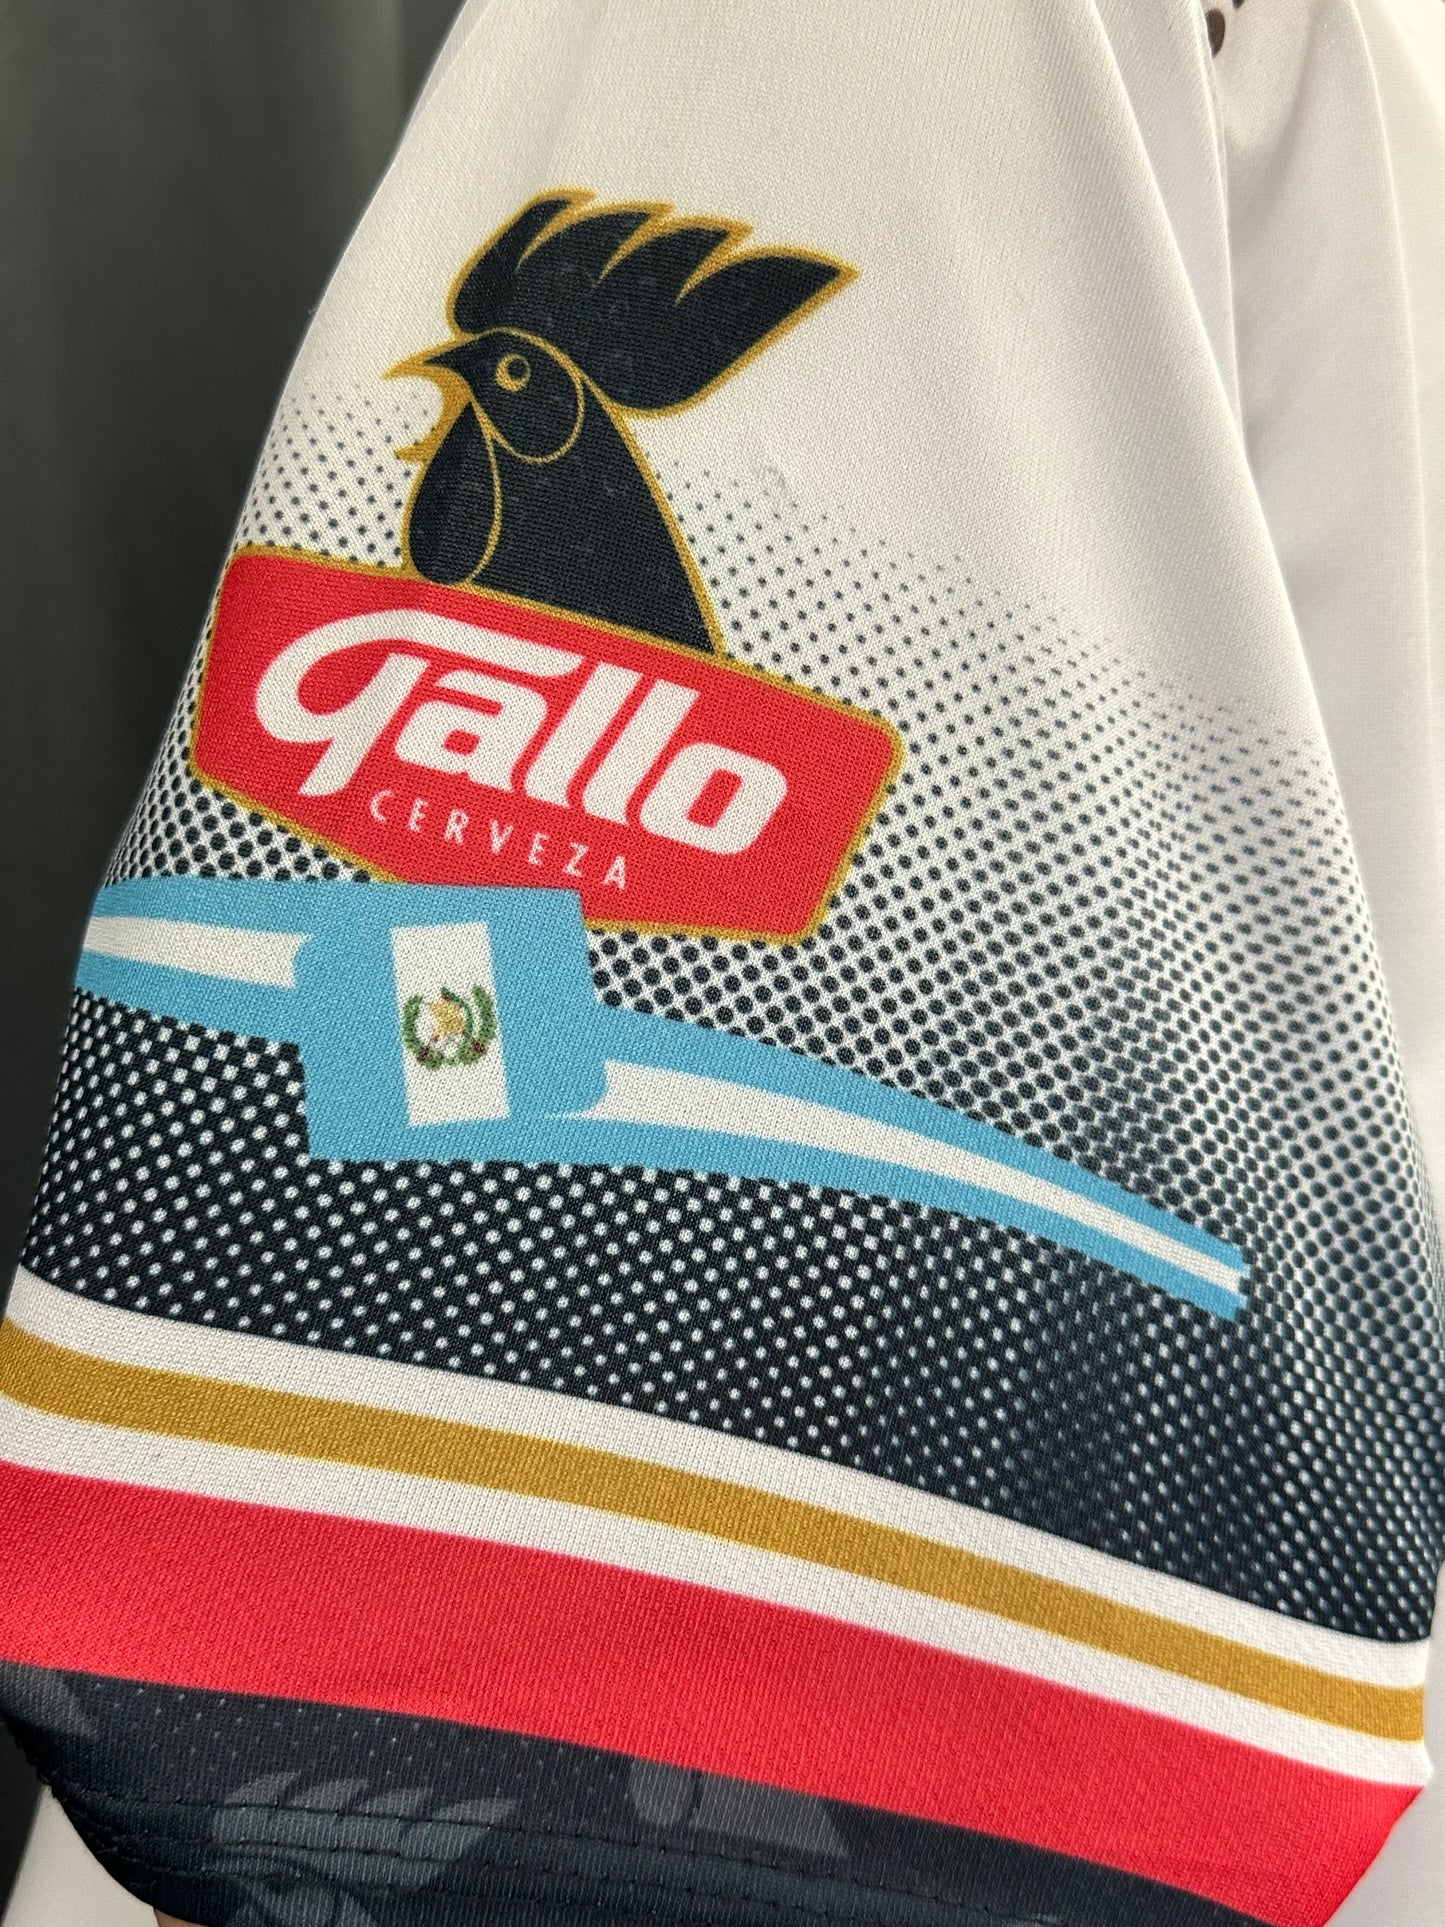 Men's Guatemalan Gallo Beer Jersey with Logo